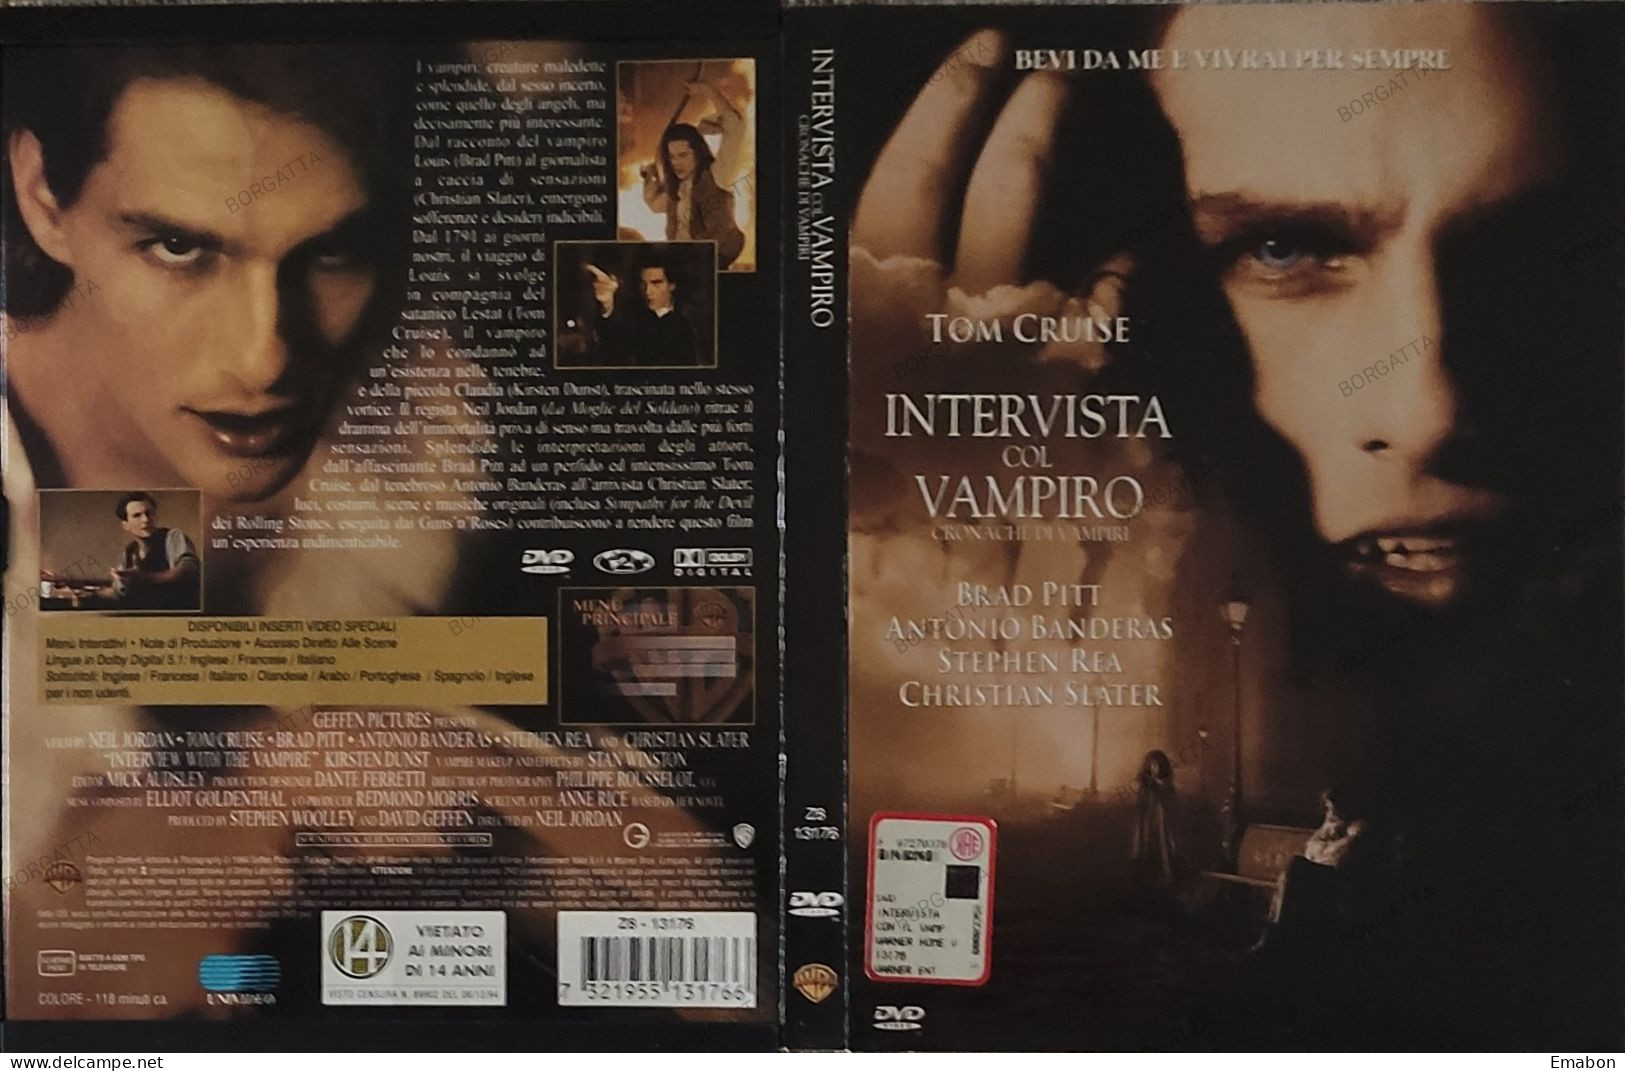 BORGATTA - HORROR - Dvd " INTERVISTA COL VAMPIRO "-PITT, BANDERAS, SLATER - PAL 2 - WARNER 1998 -  USATO In Buono Stato - Horror